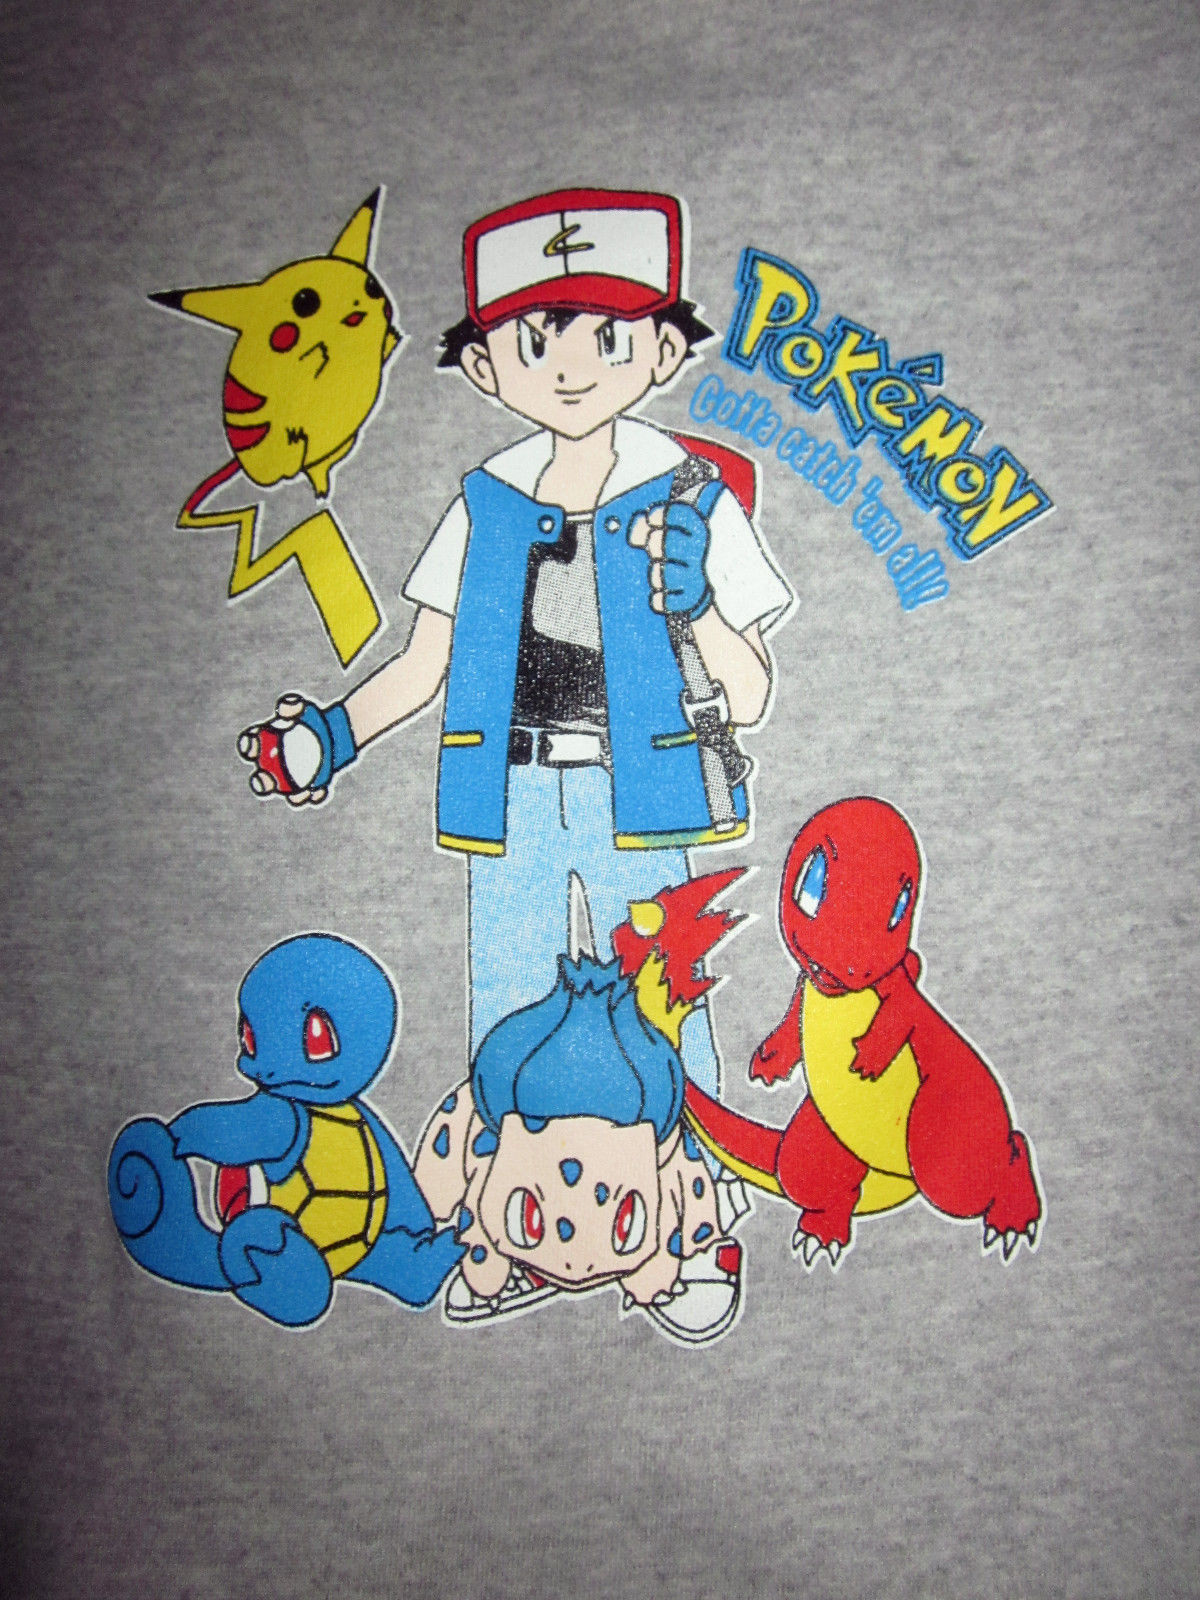 http://www.ebay.com/itm/Vintage-POKEMON-Sweatshirt-1990s-ORIGINAL-90s-PROMO-NOS-game-shirt-rare-japan-/300971562292?pt=Vintage_Unisex_T_Shirts&amp;hash=item46134d9534